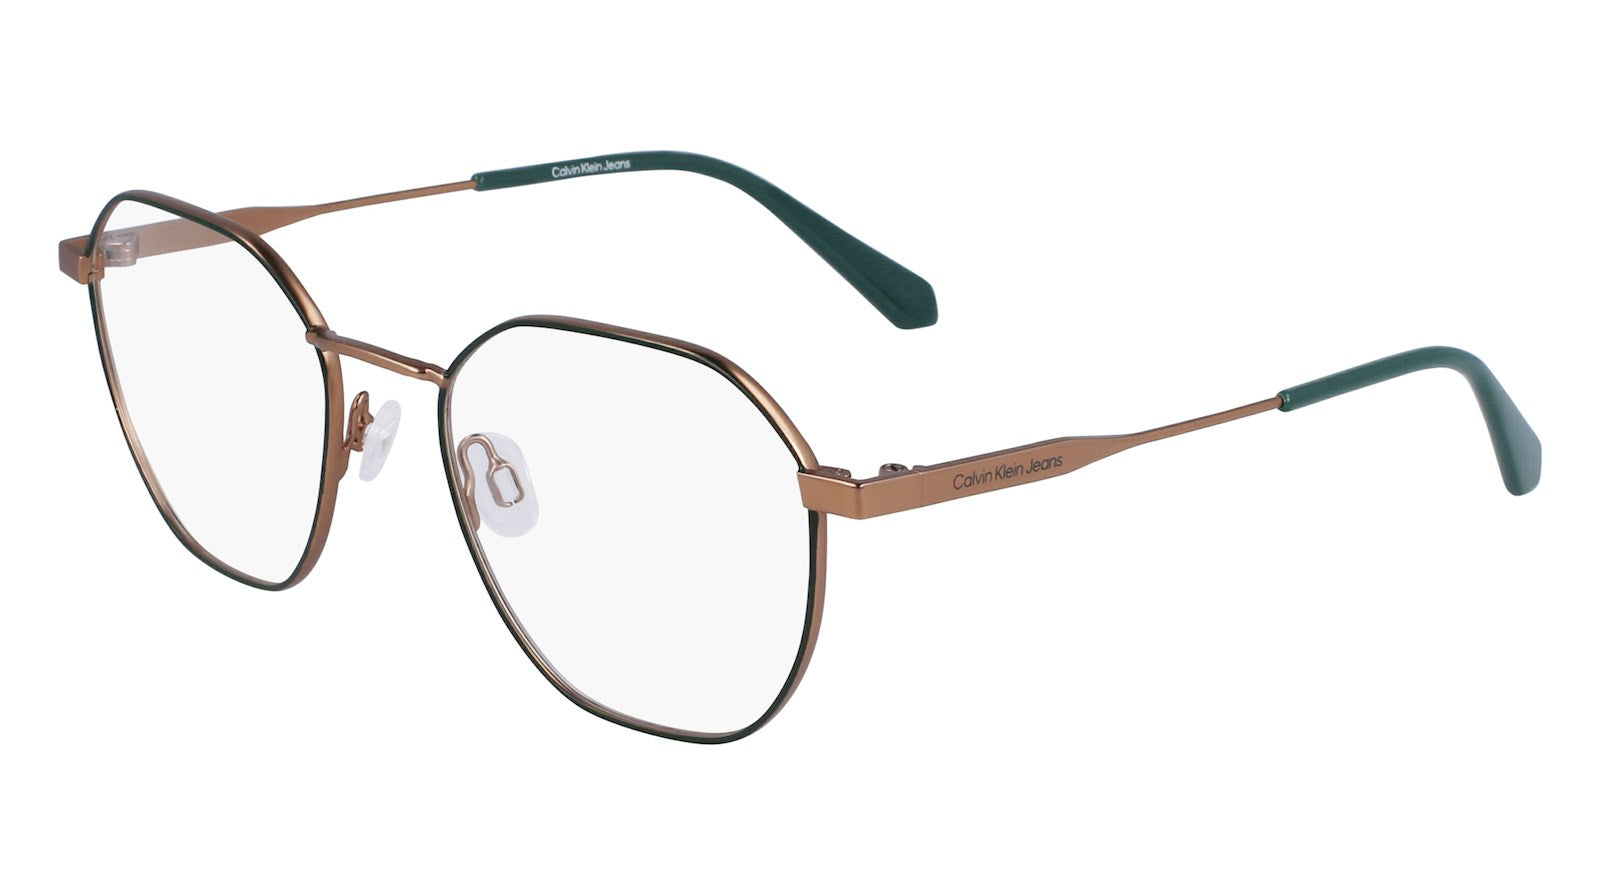 Buy Tortoise Super Oversized Eyeglasses Flat Top Square Clear Lens Glasses  Frames at Amazon.in